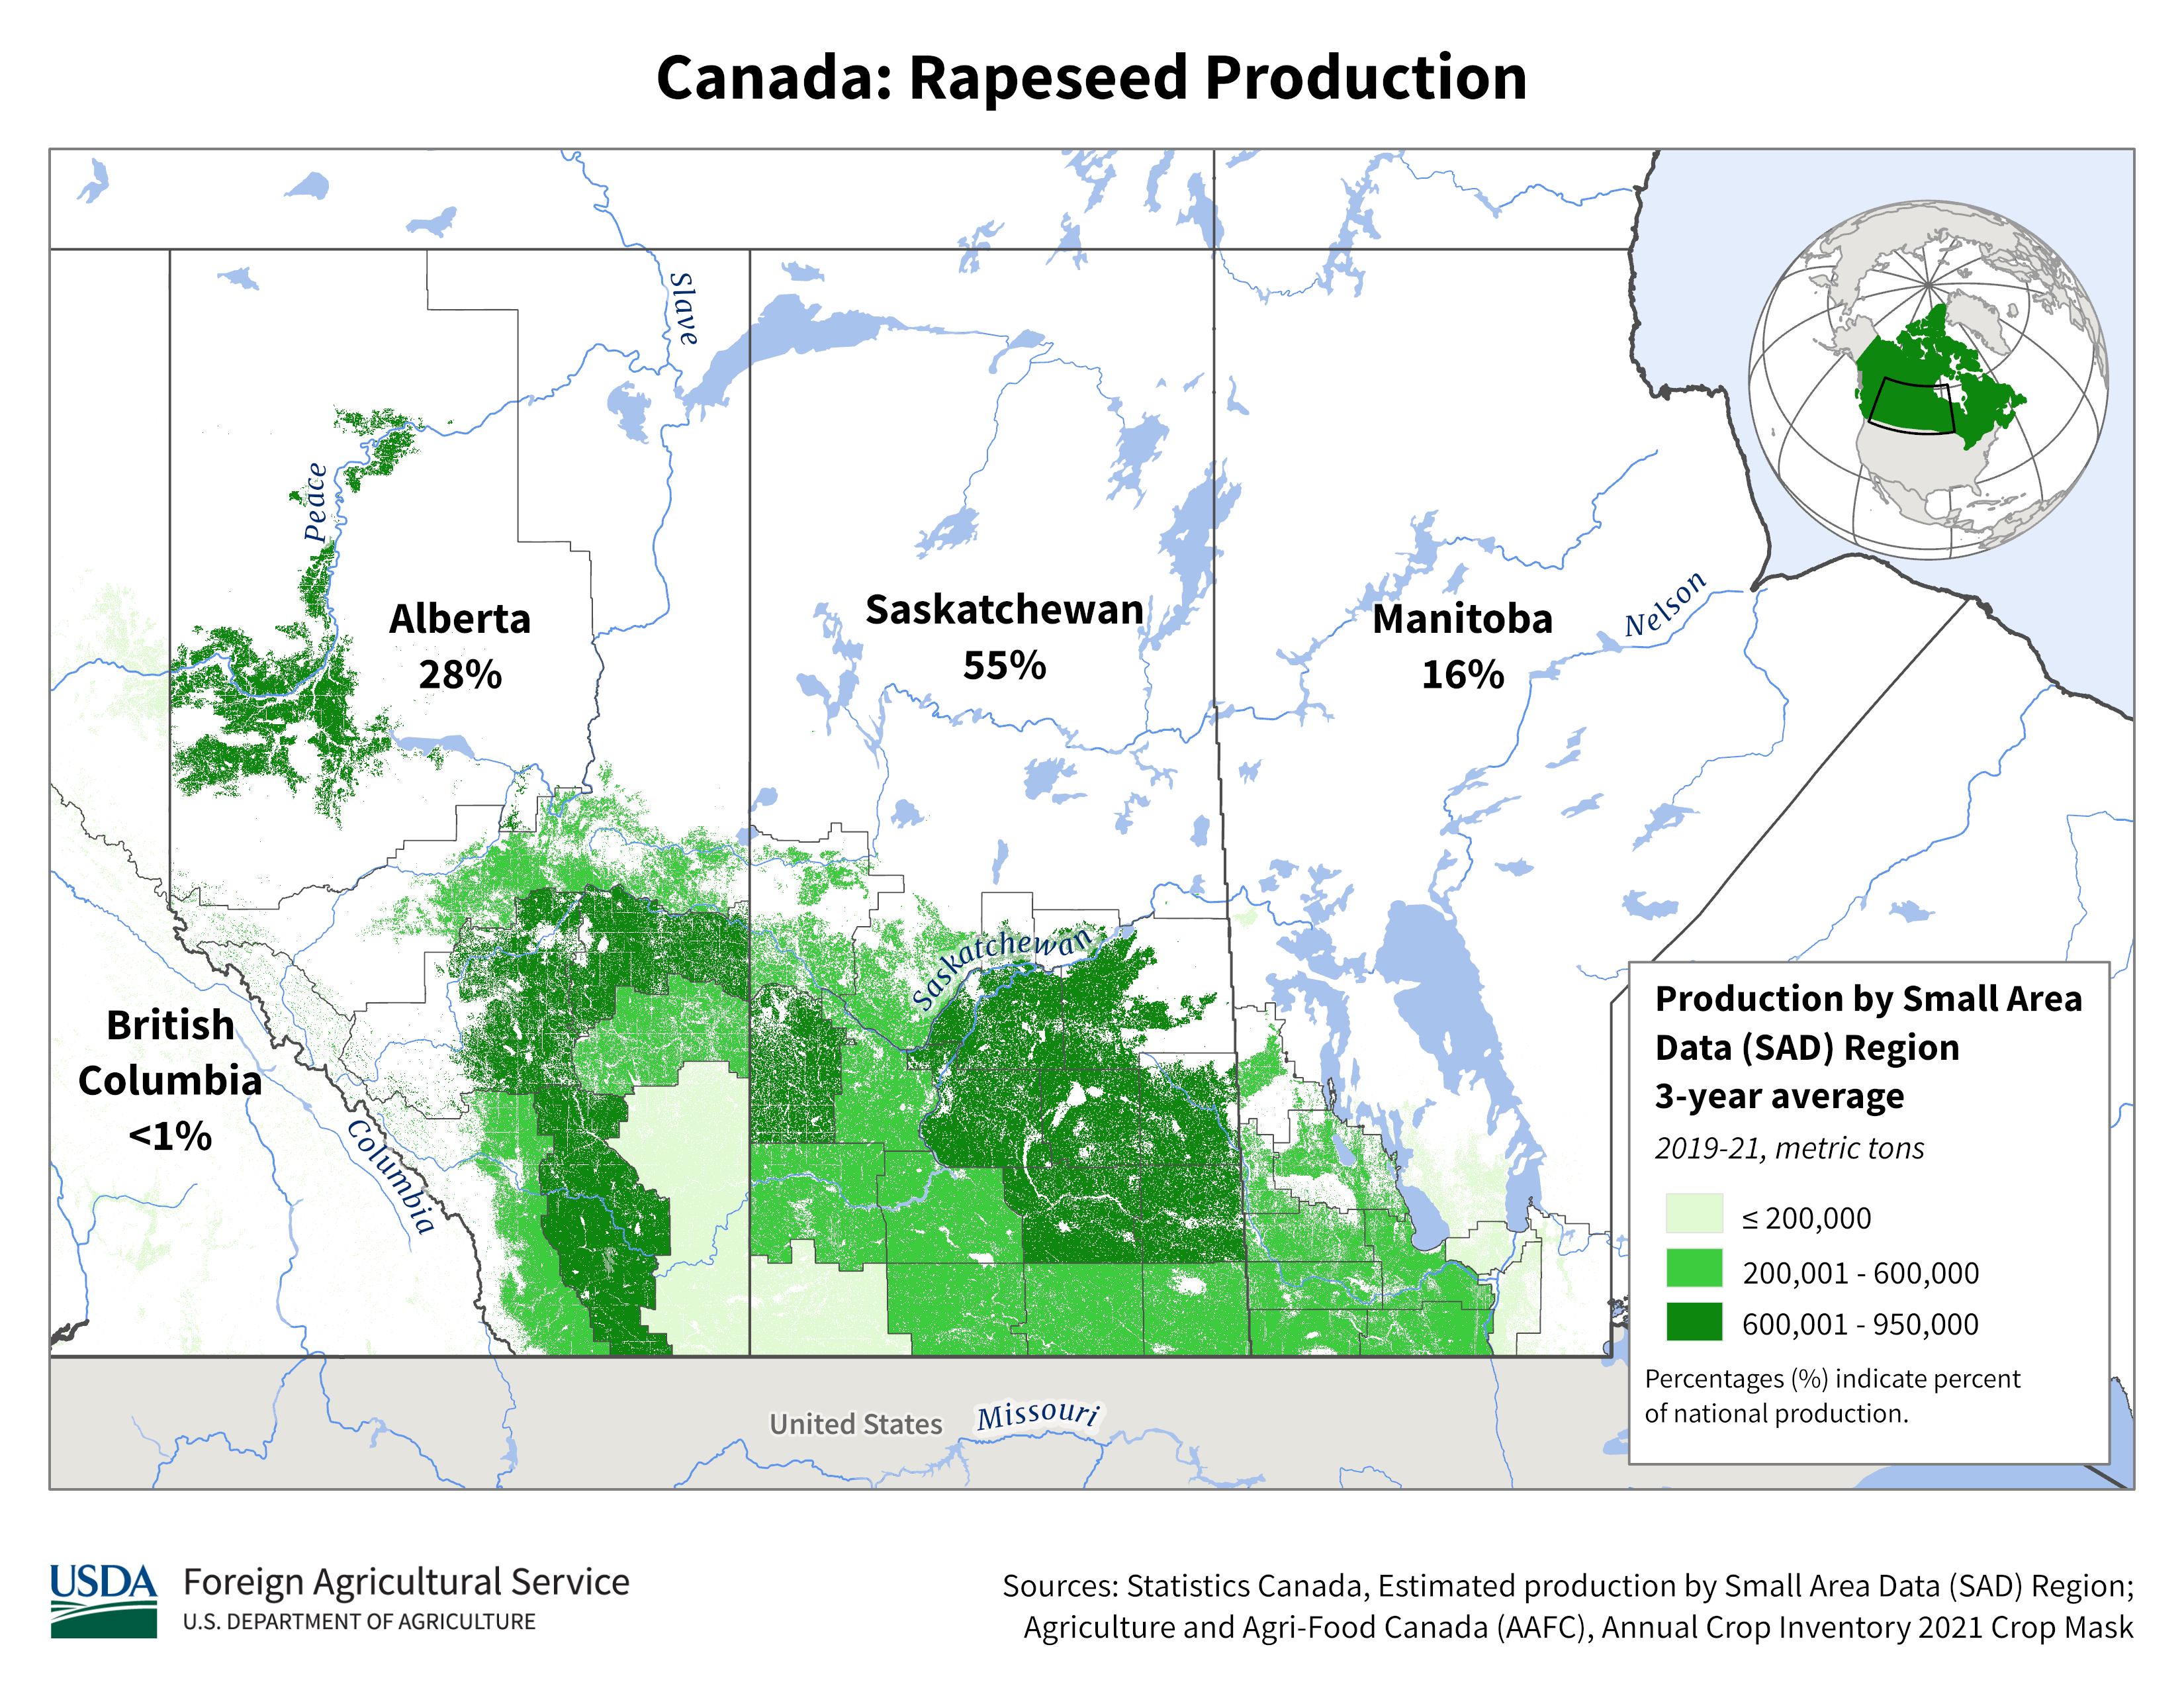 https://ipad.fas.usda.gov/rssiws/al/crop_production_maps/Canada/Canada_Rapeseed.png